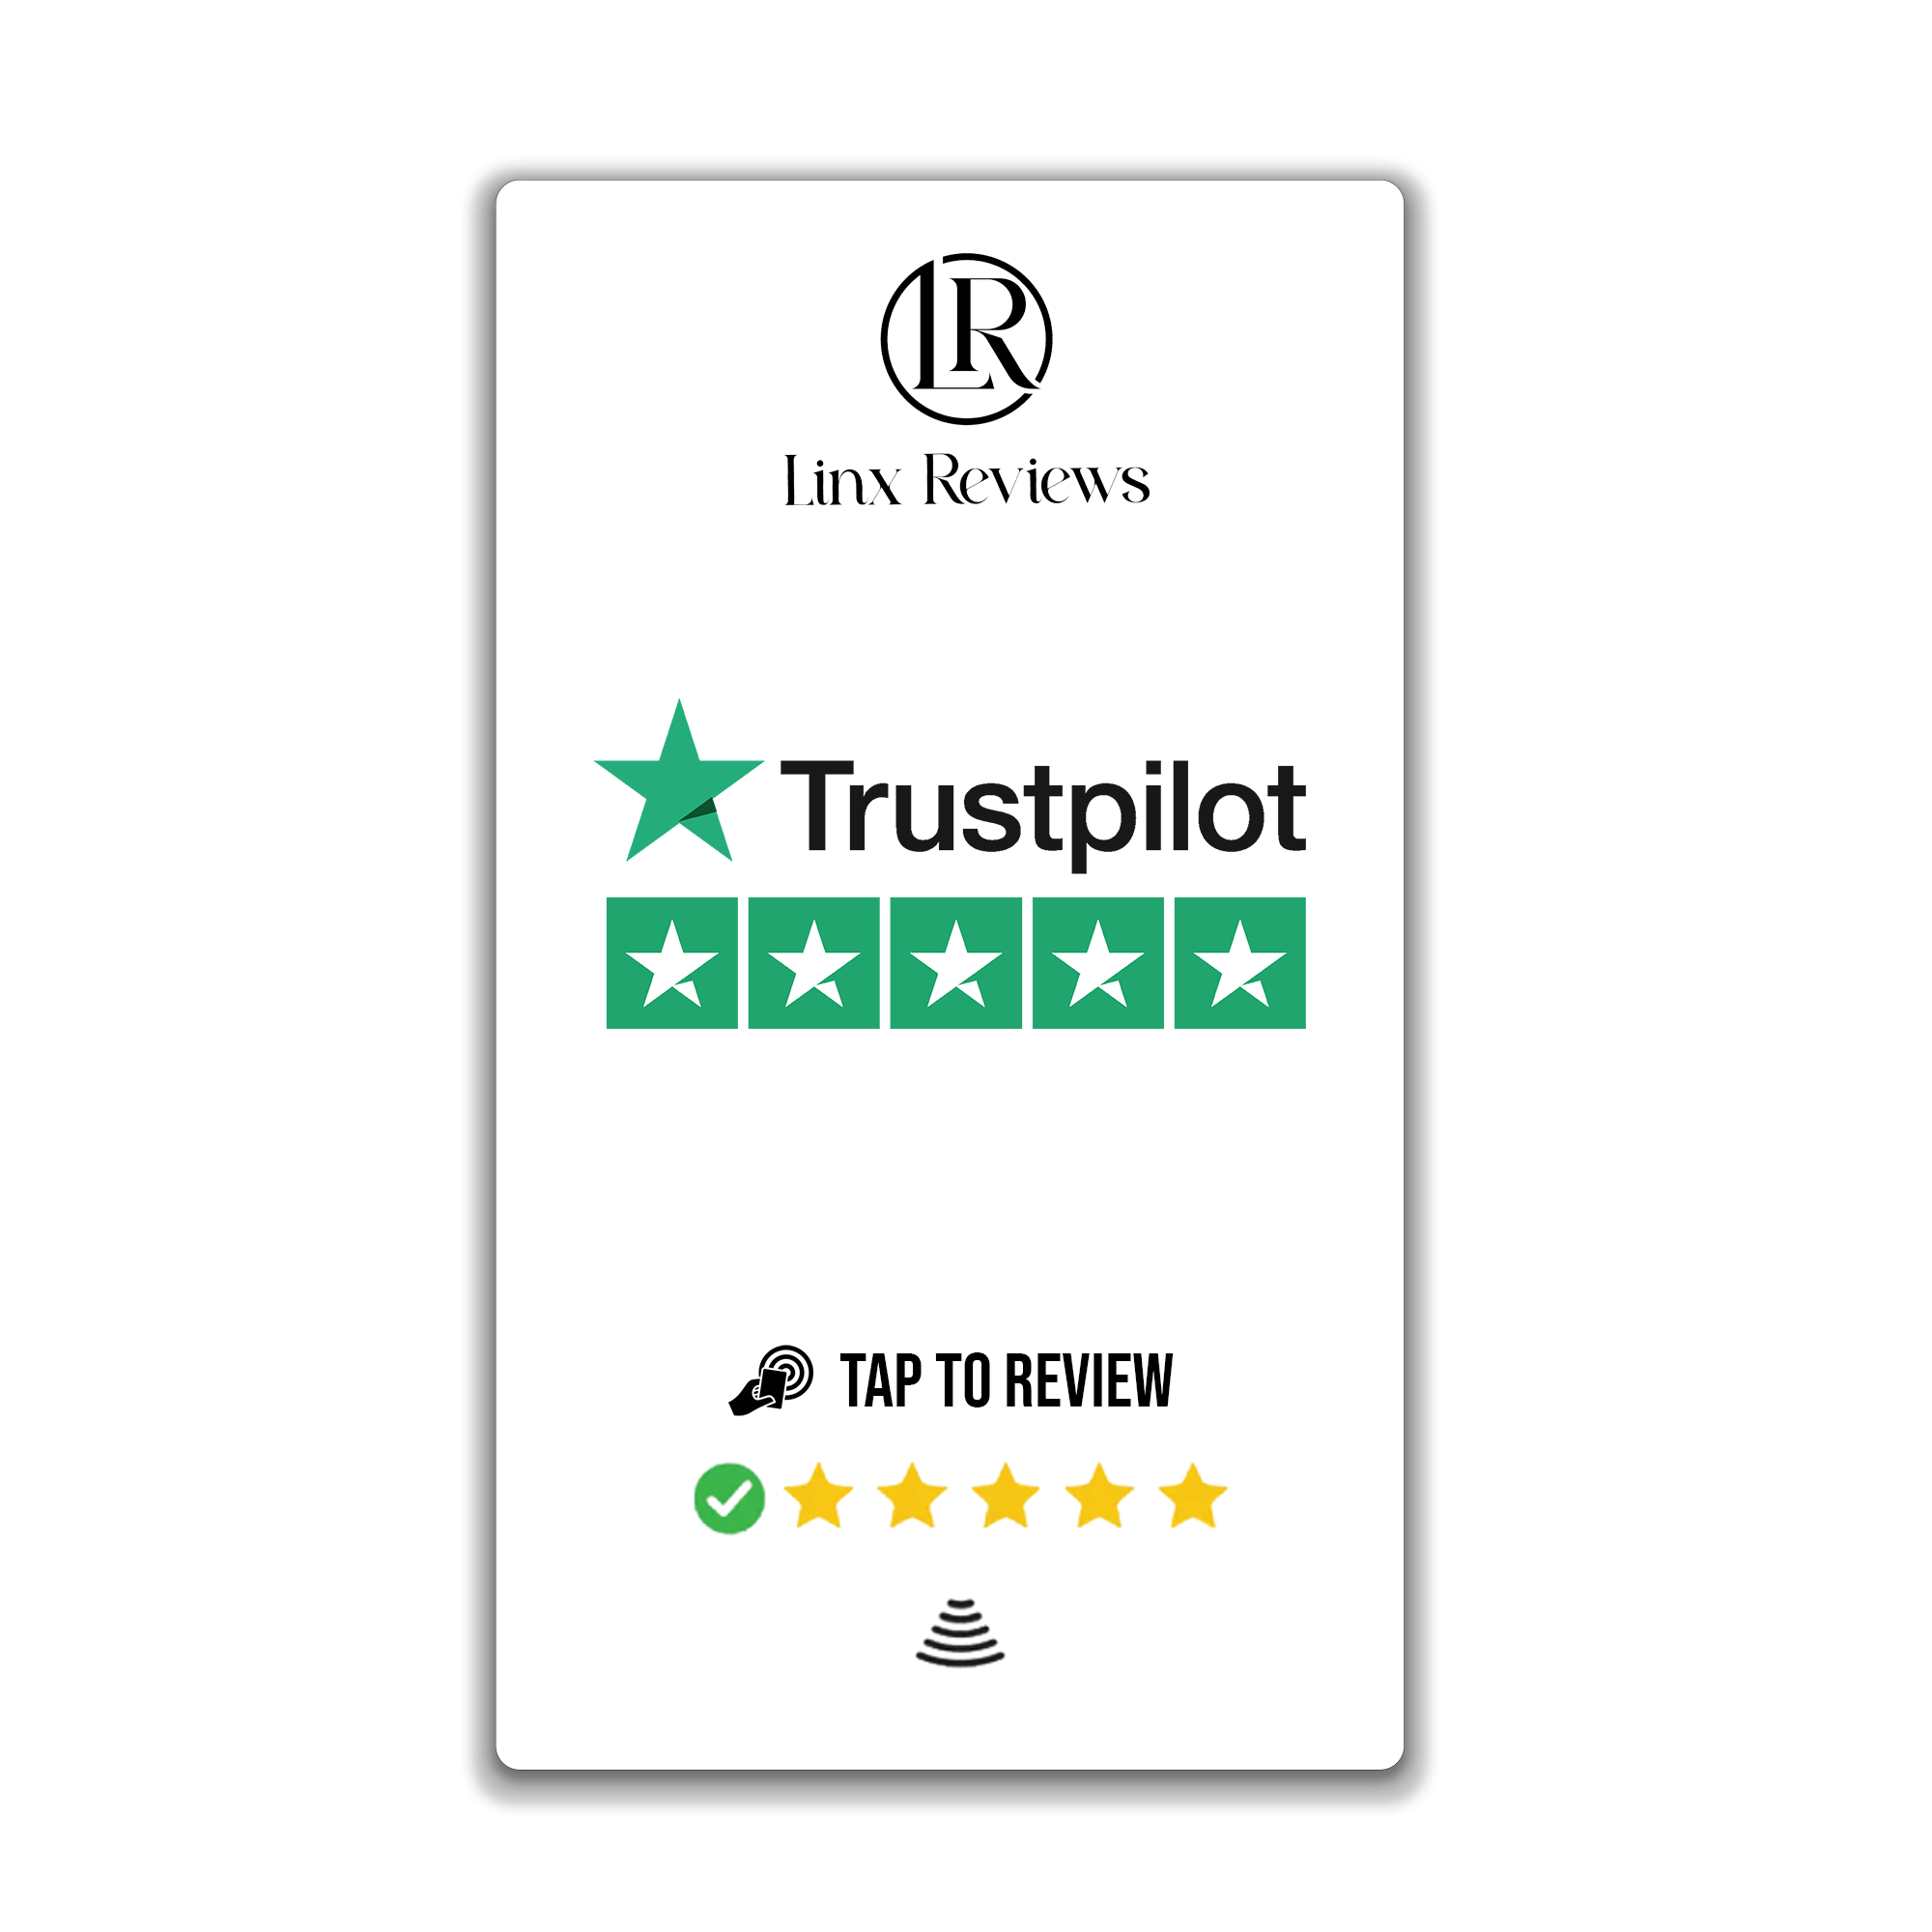 Trustpilot Customer Reviews Card bundles